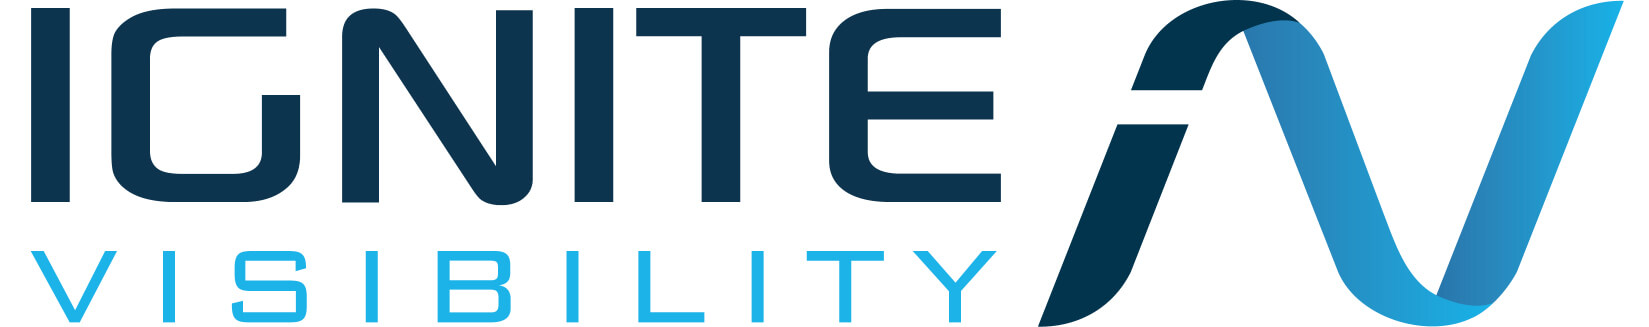  Top Enterprise SEO Firm Logo: Ignite Visibility